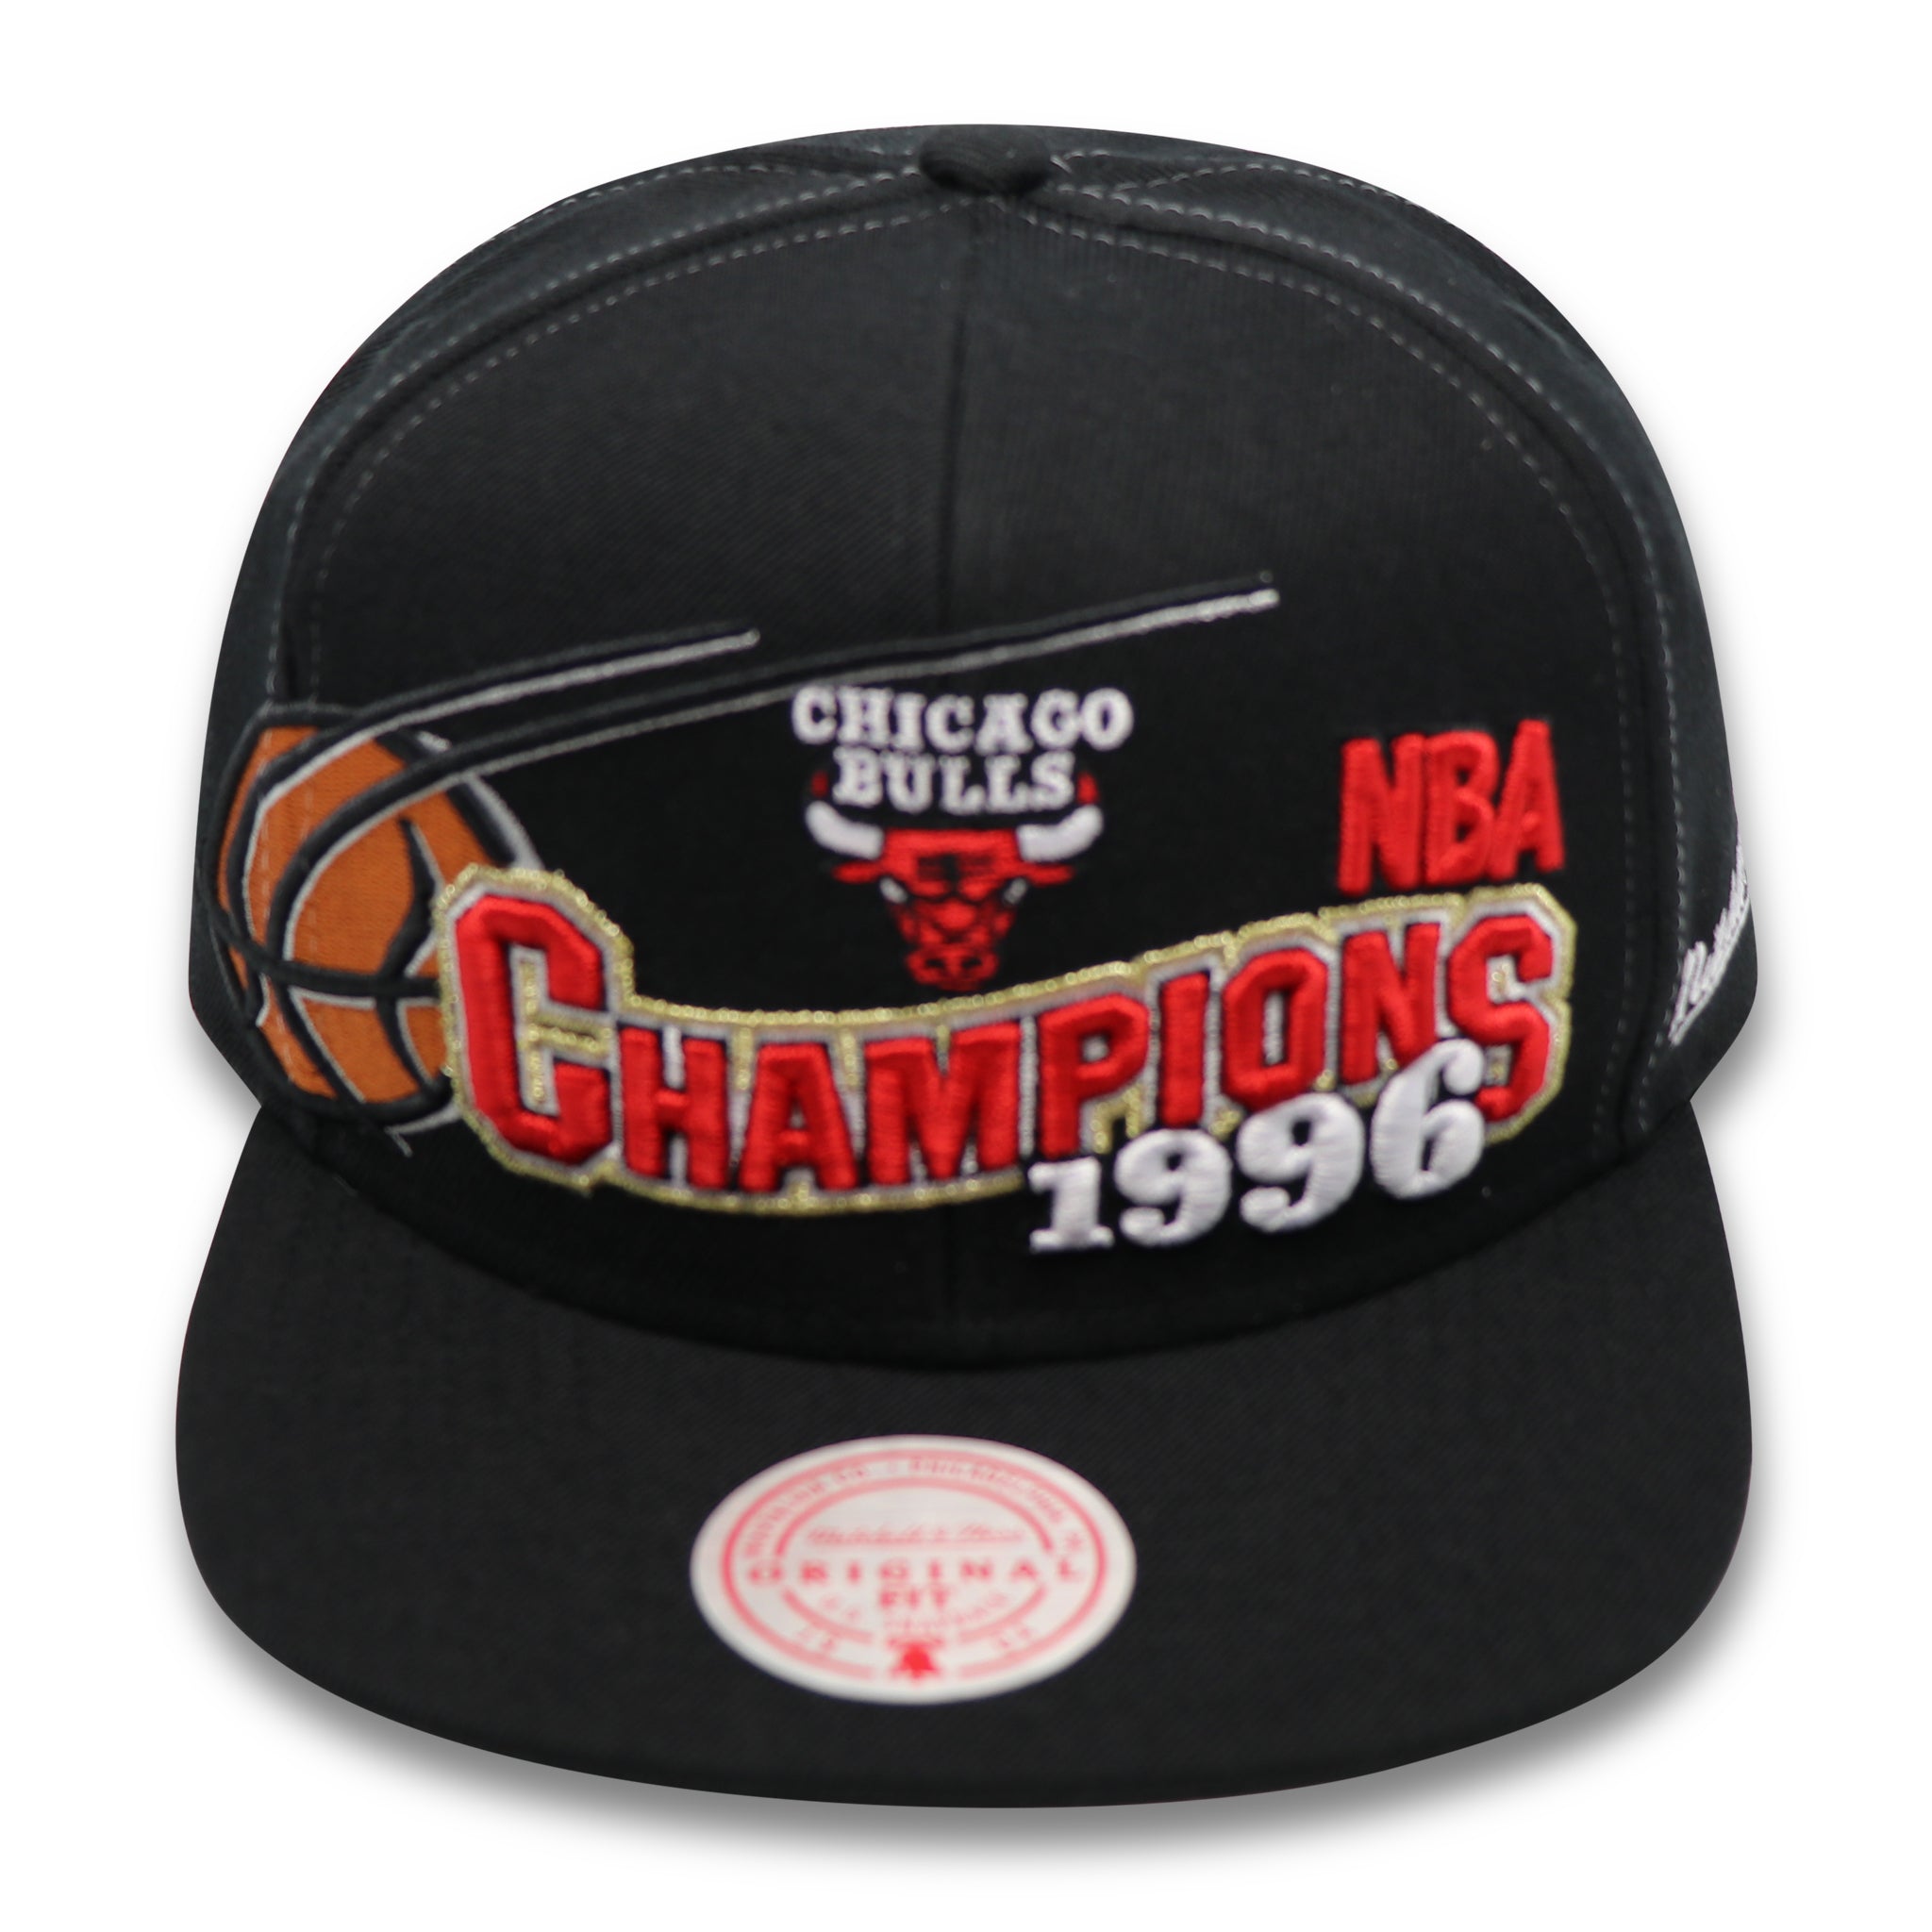 MITCHELL & NESS CHICAGO BULLS (1996 NBA CHAMPIONS) BLACK SNAPBACK